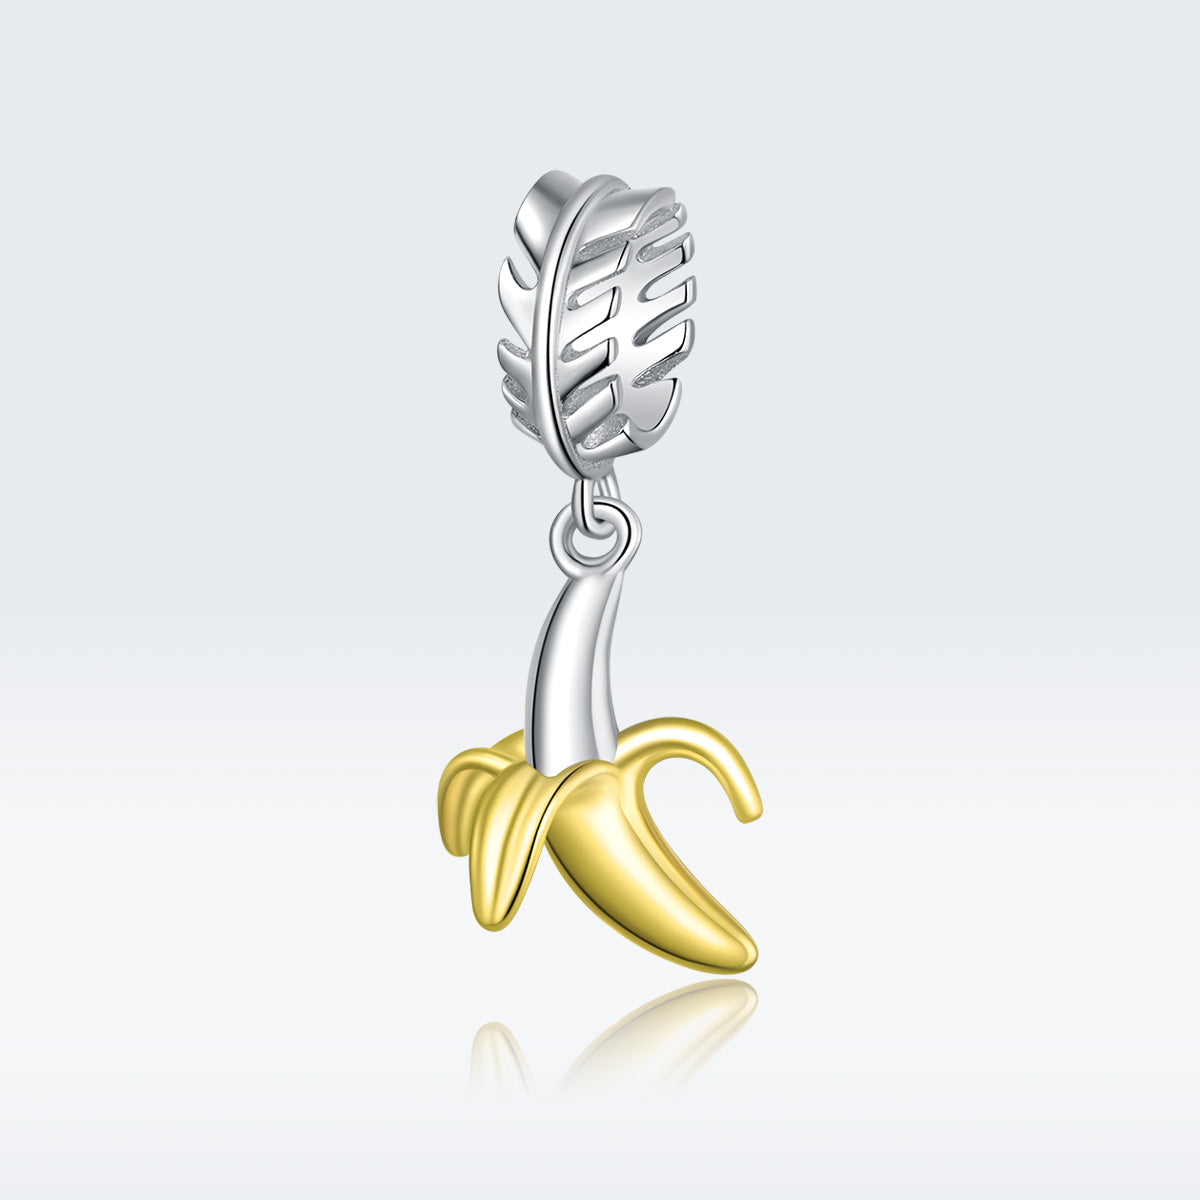 Sterling 925 silver charm the banana bead pendant fits Pandora charm and European charm bracelet Xaxe.com